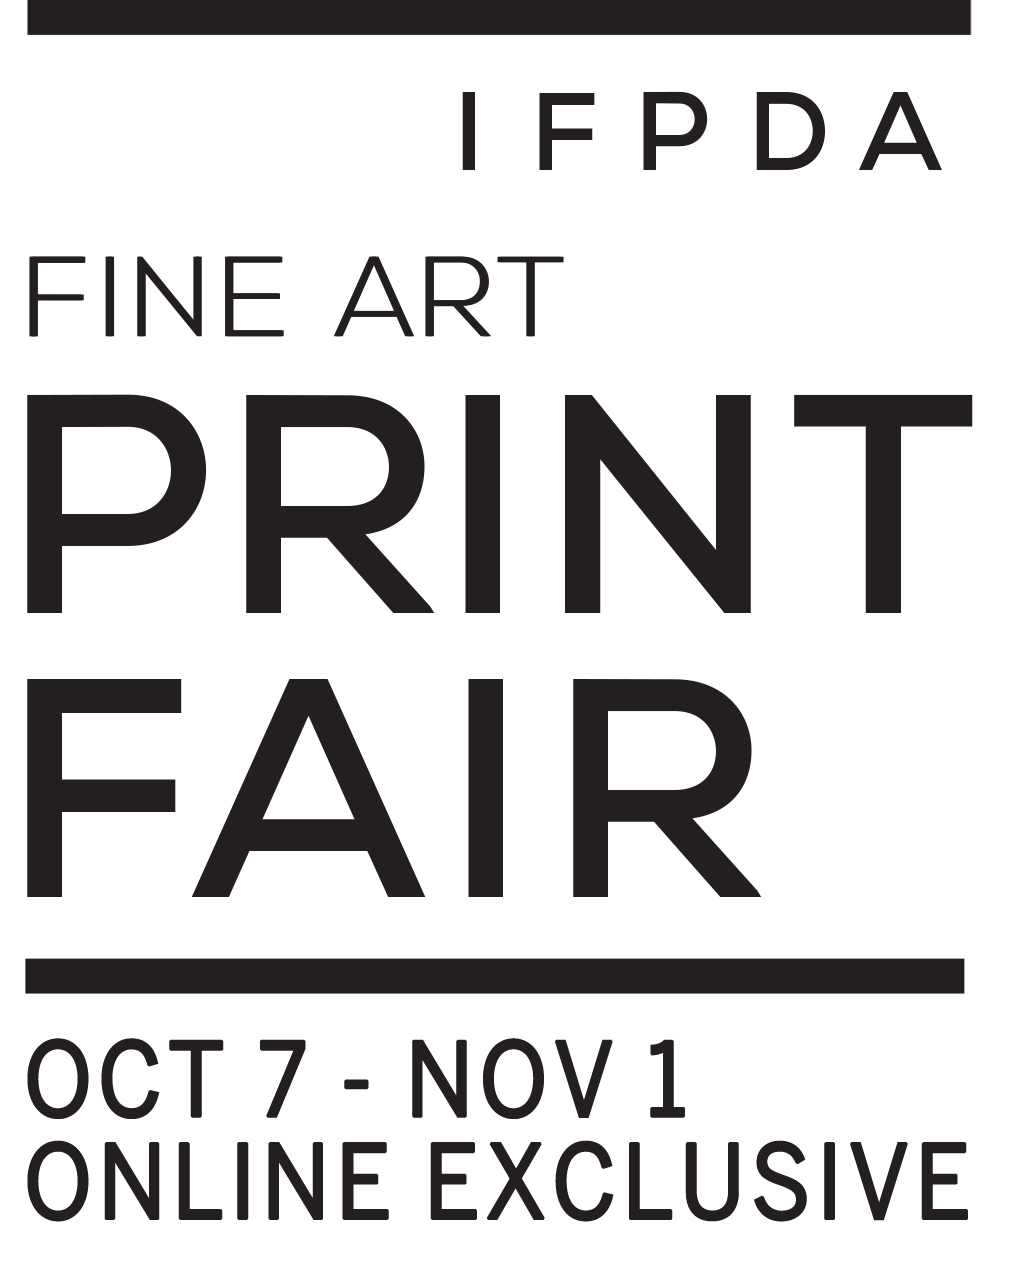 IFPDA Fine Art Print Fair Banner